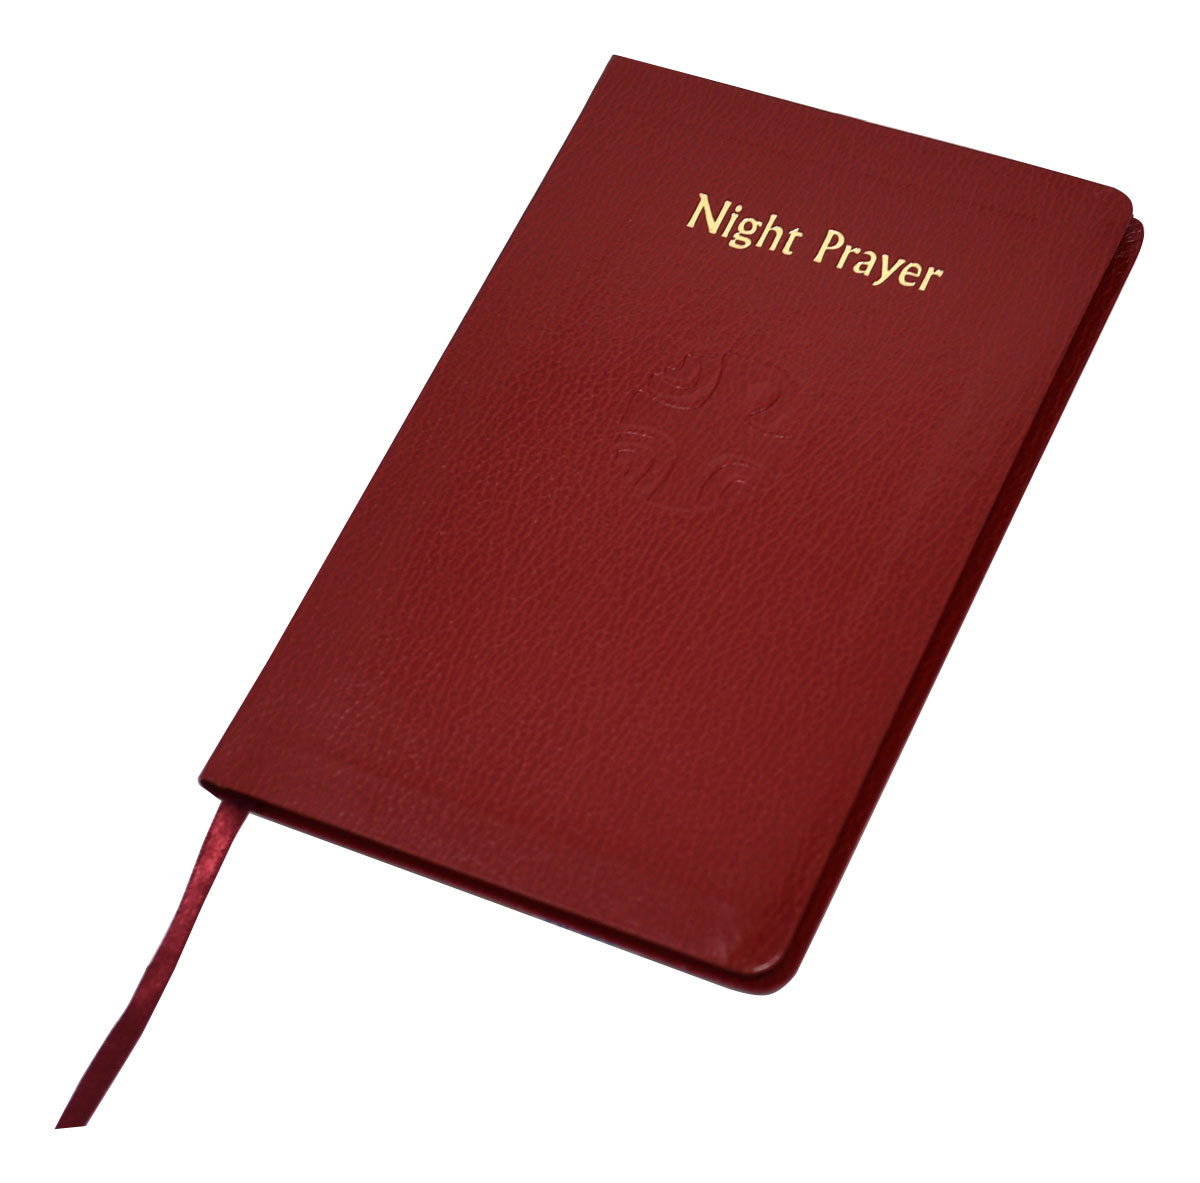 a night night prayer book